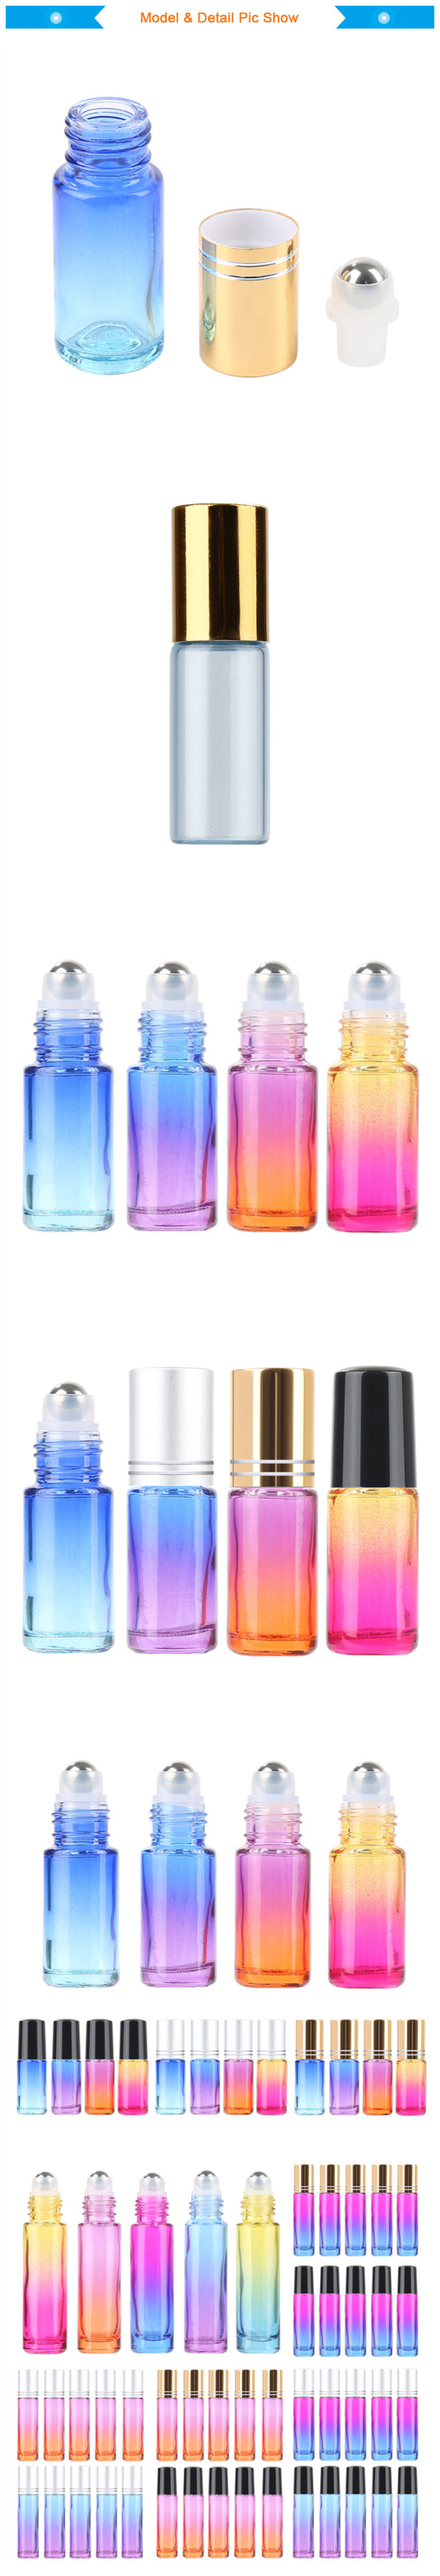 10ml/5ml Perfume Bottles Gradient Color Roll on Empty Bottles